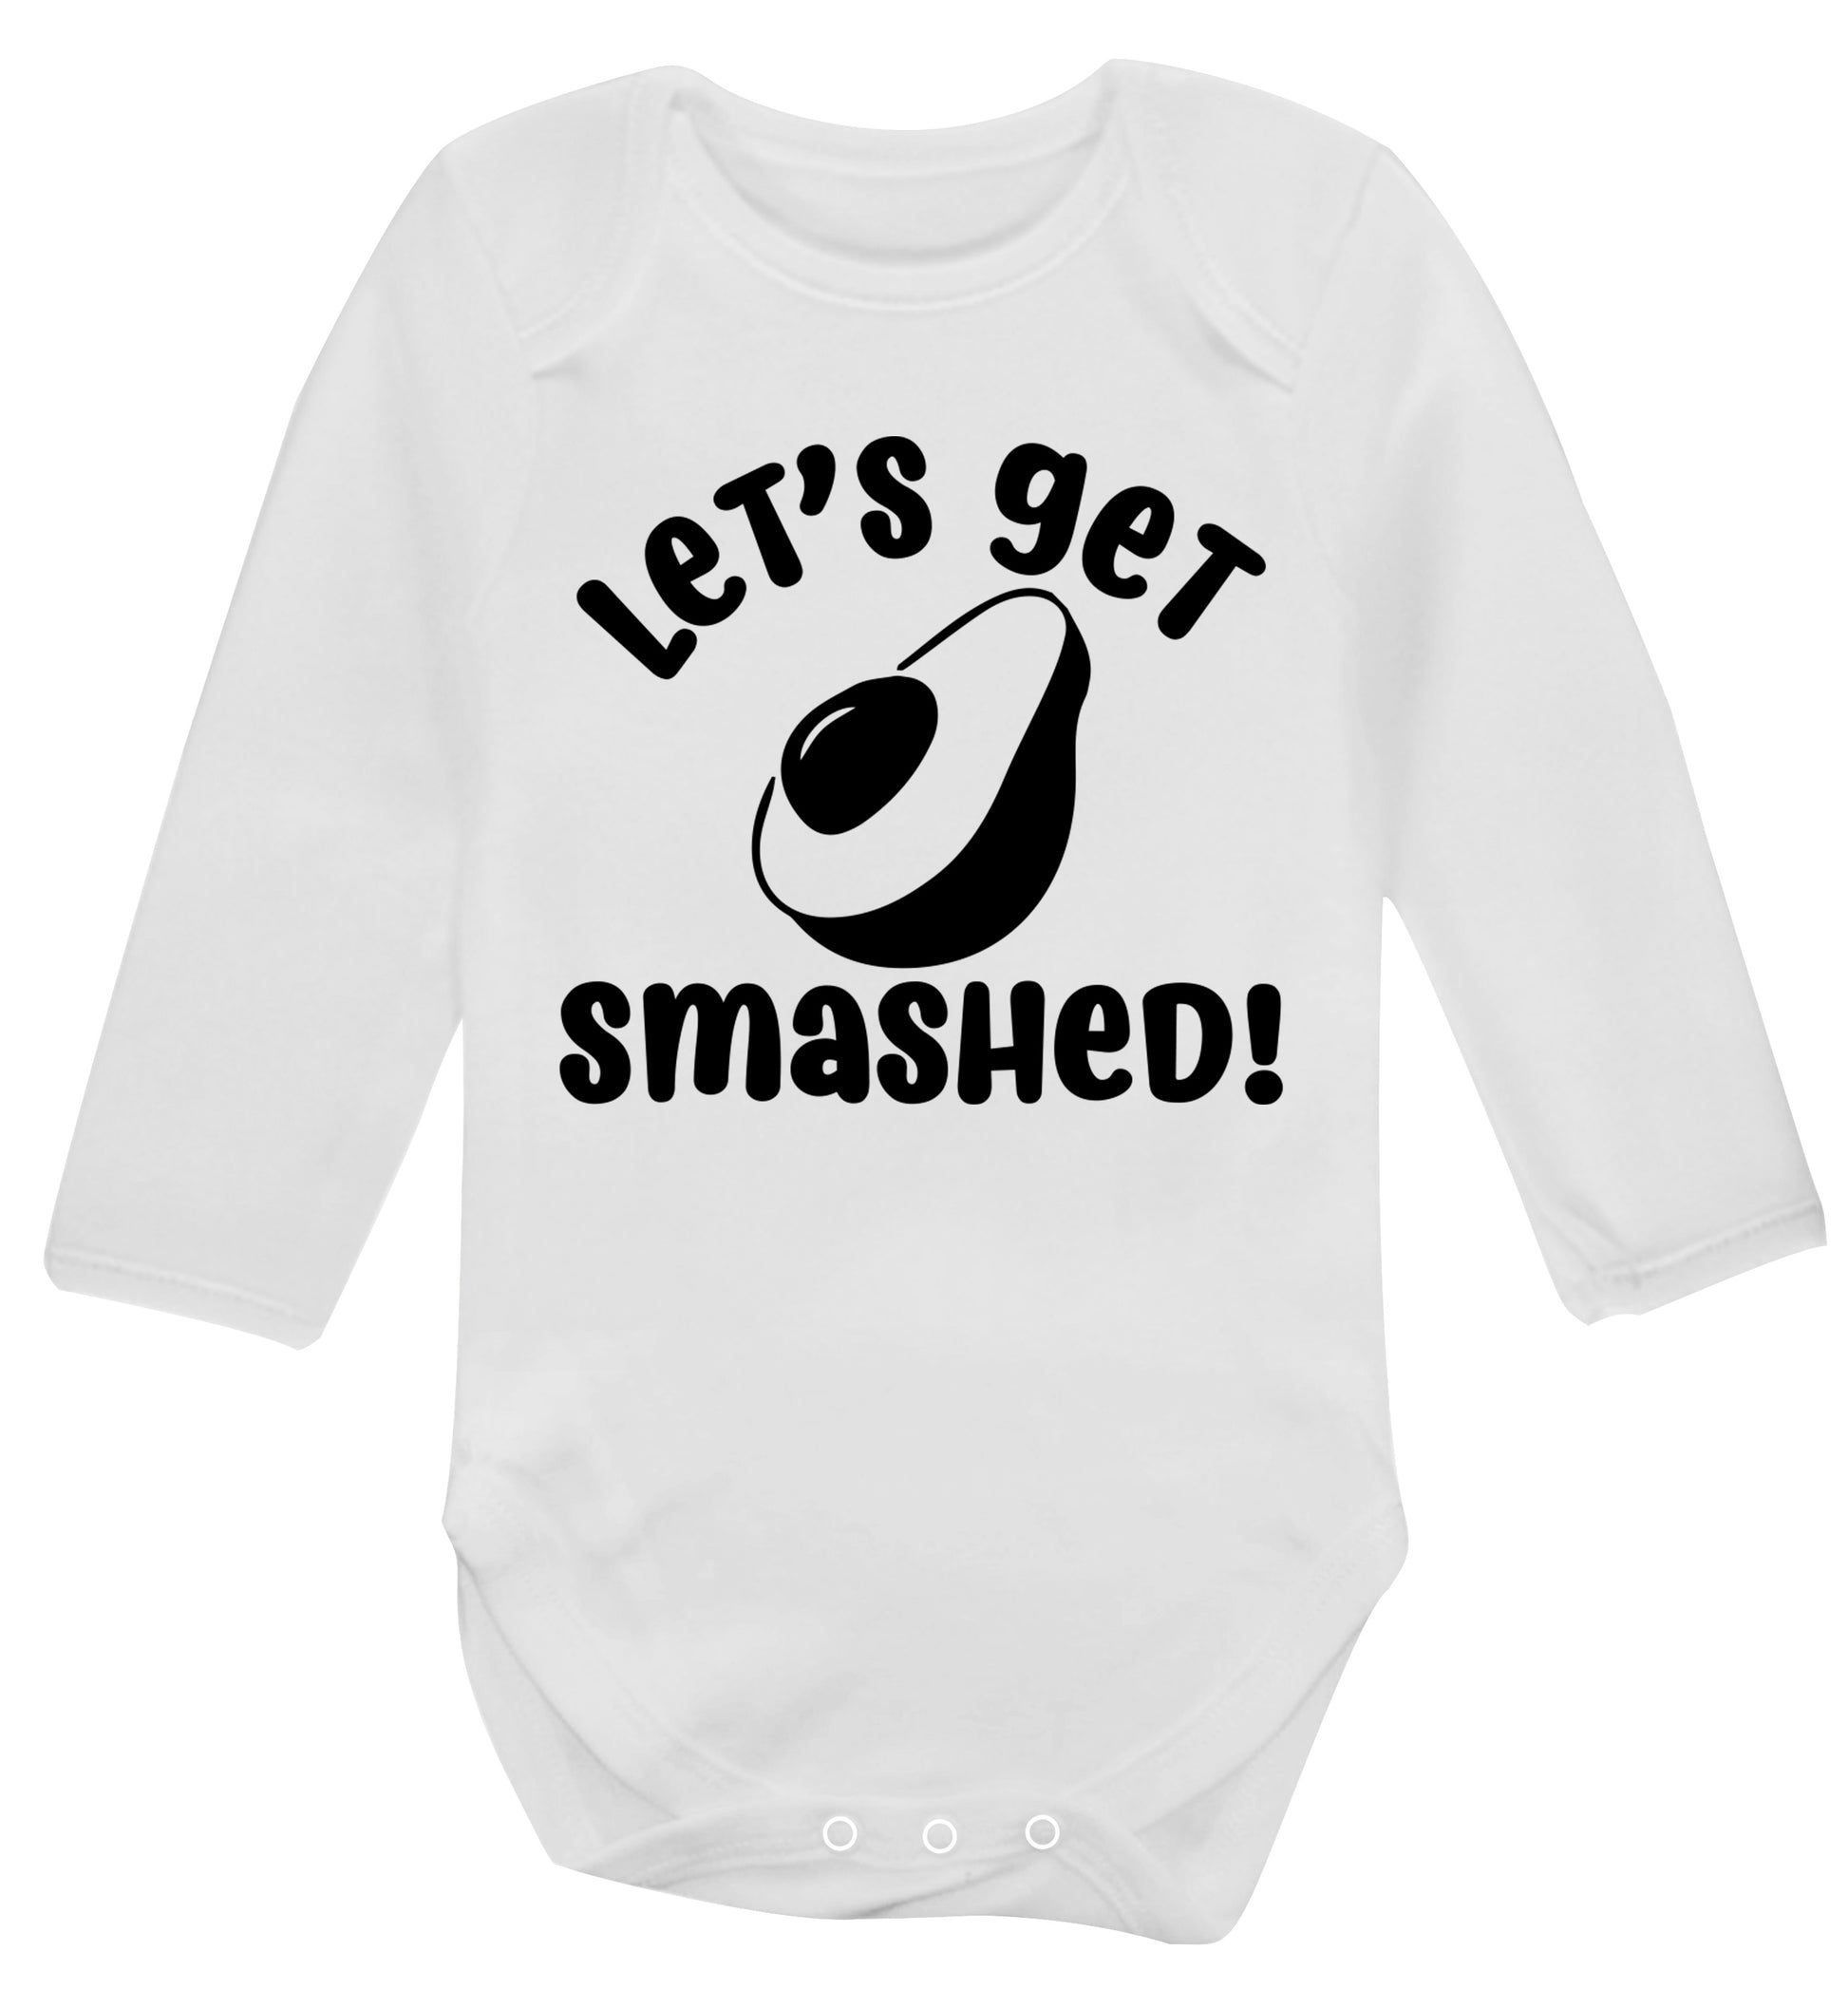 Let's get smashed Baby Vest long sleeved white 6-12 months